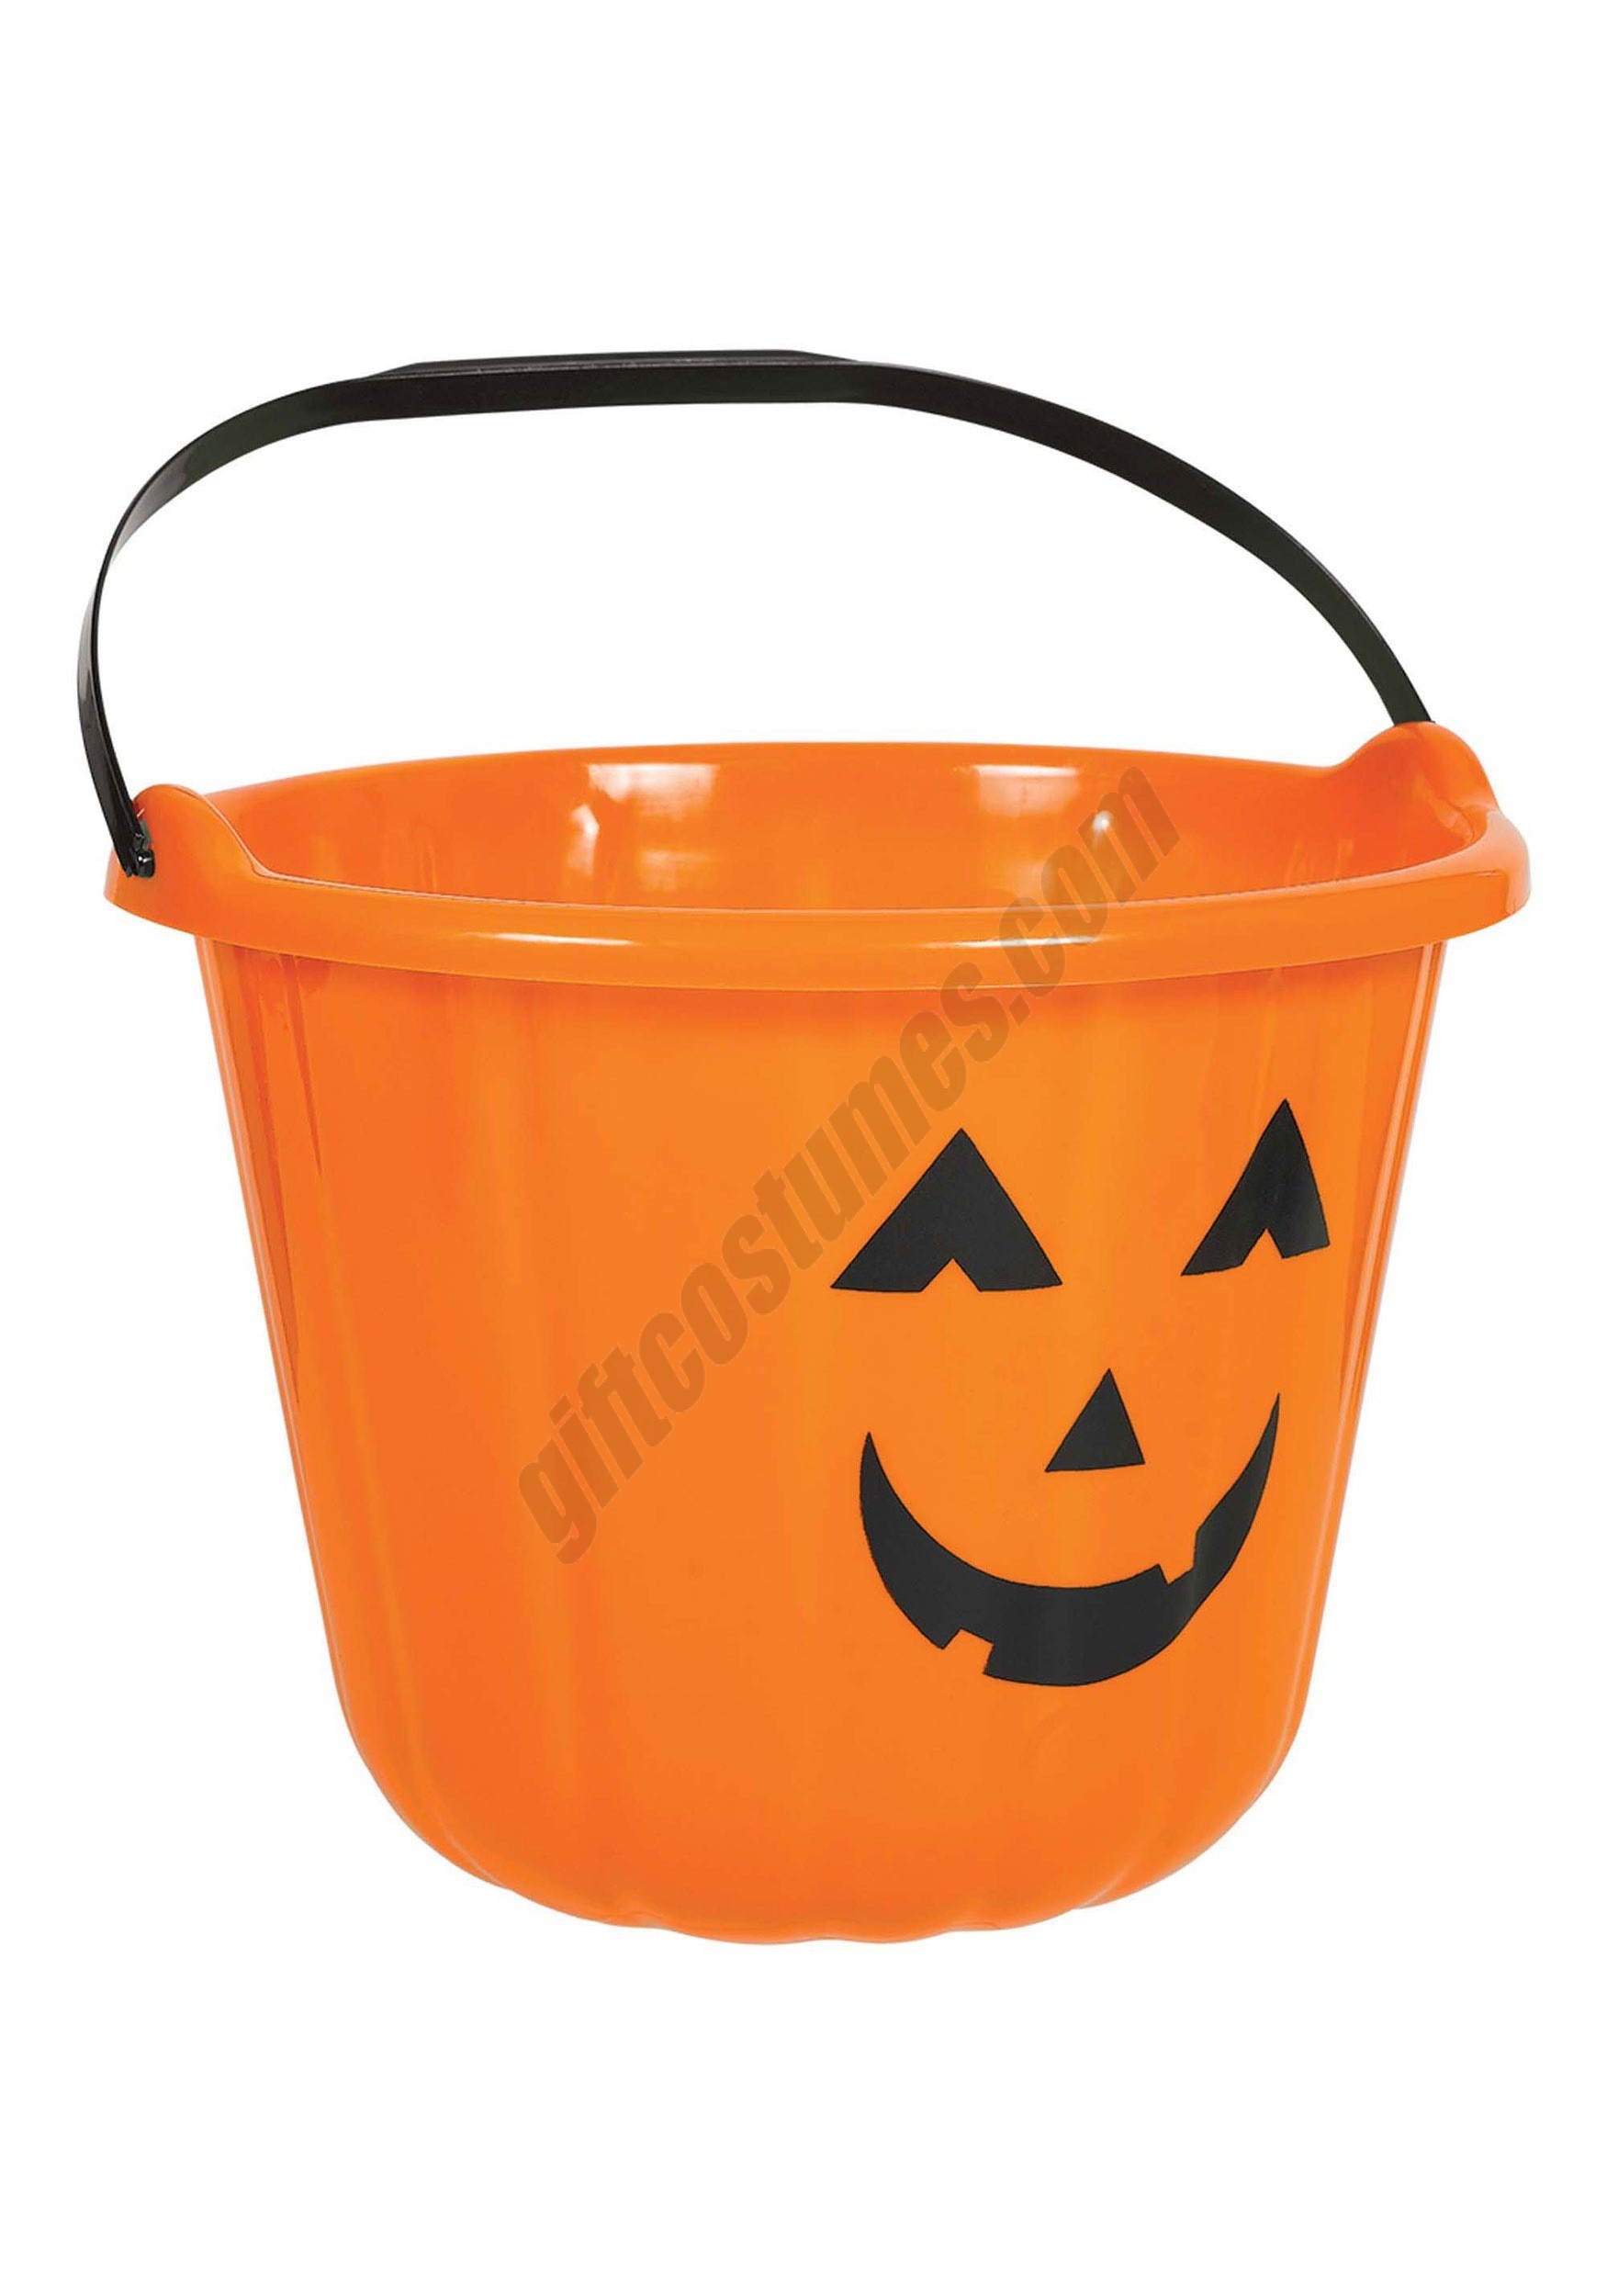 Pumpkin Treat Bucket Promotions - Pumpkin Treat Bucket Promotions